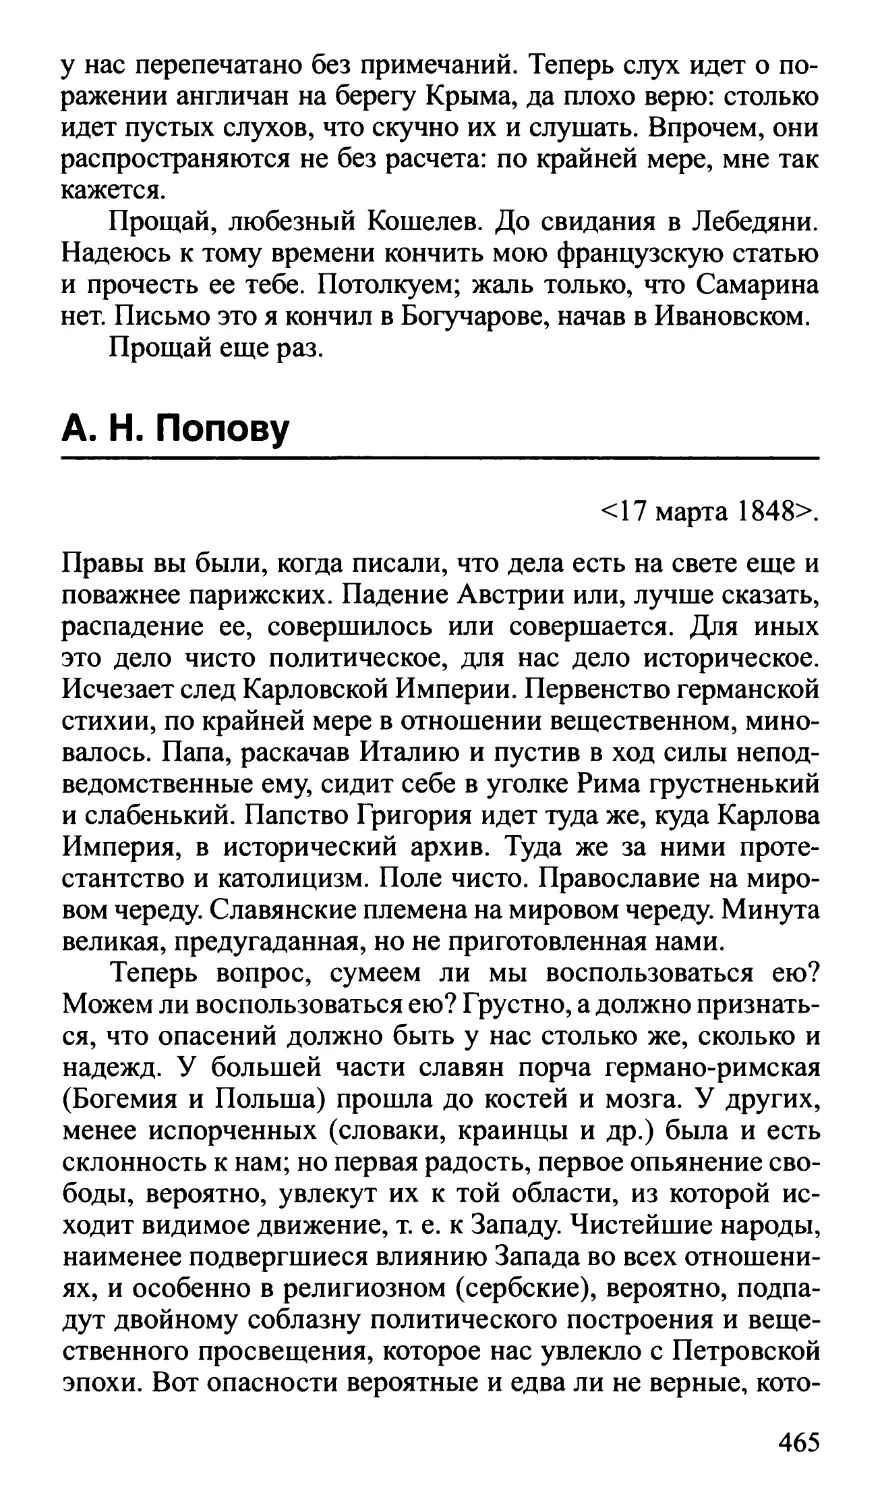 А.Н. Попову. 17 марта 1848 г.